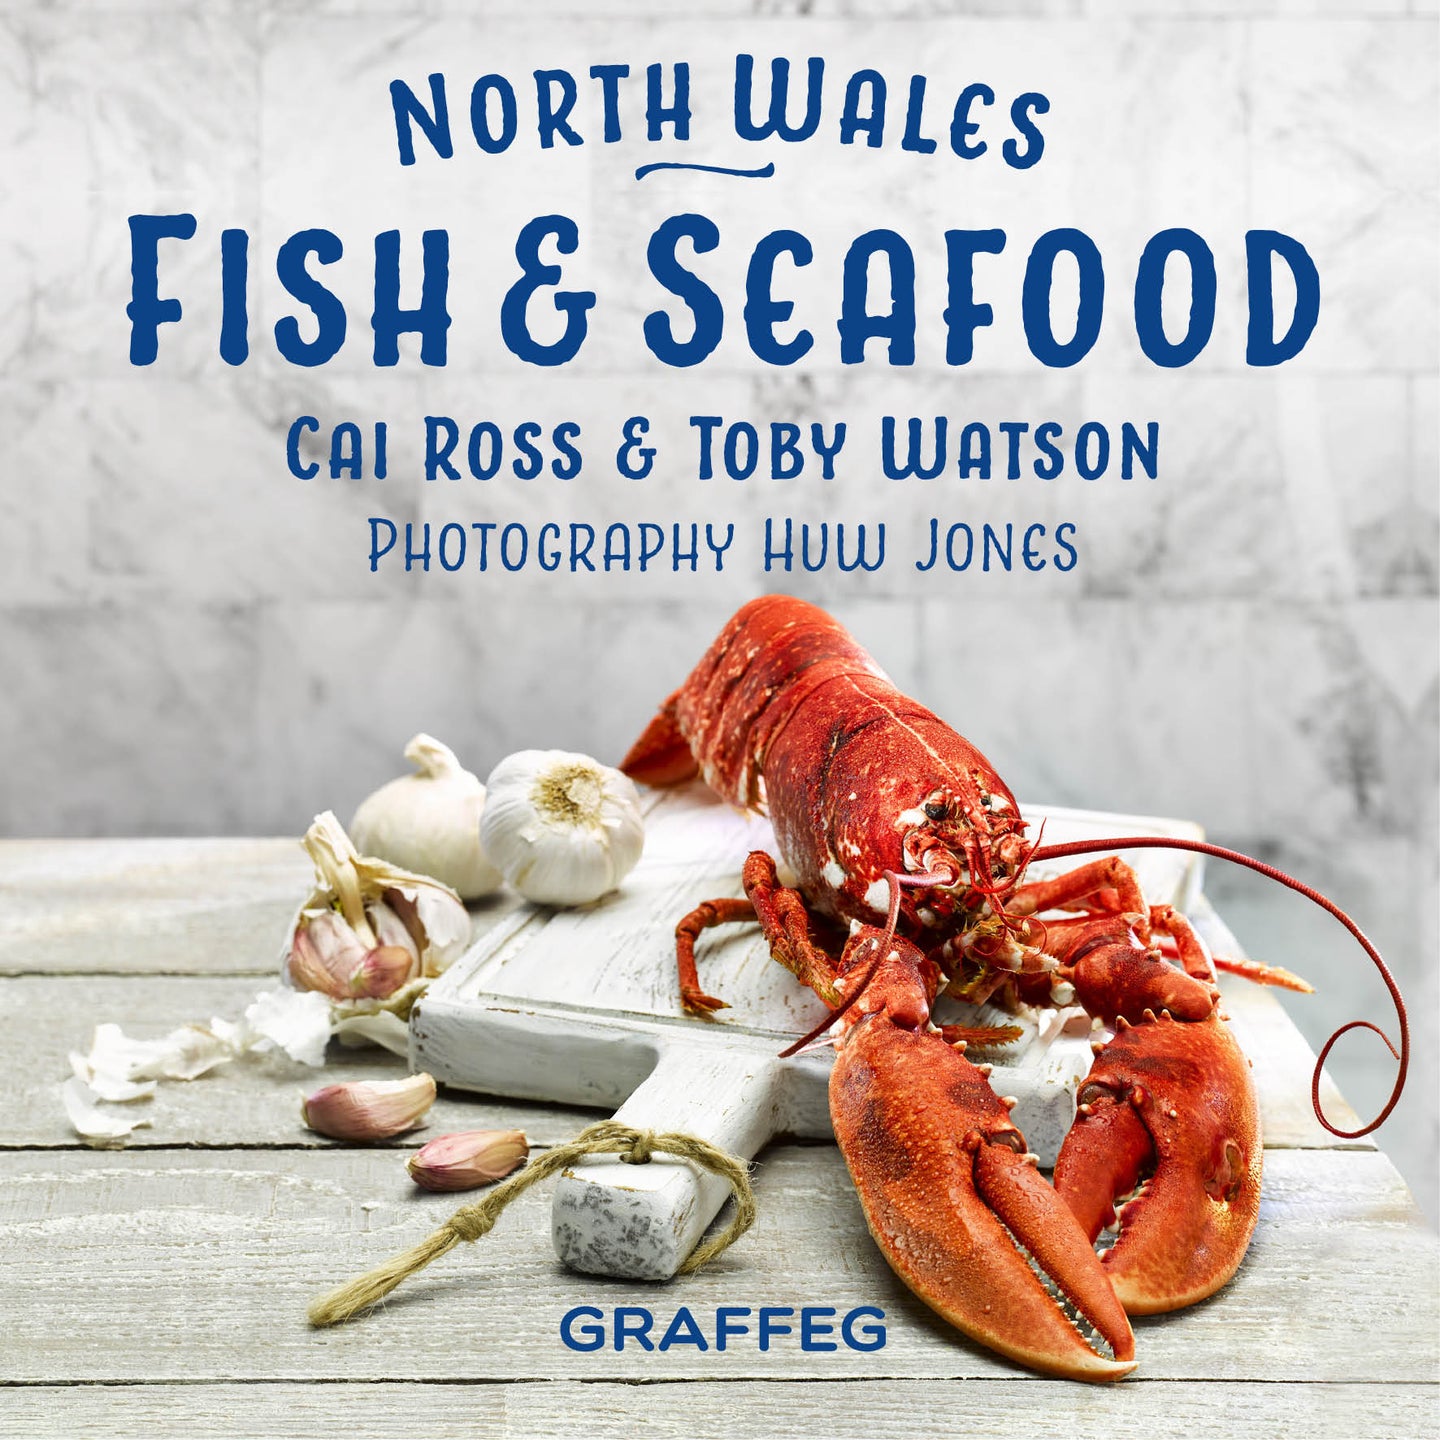 North Wales: Fish & Seafood